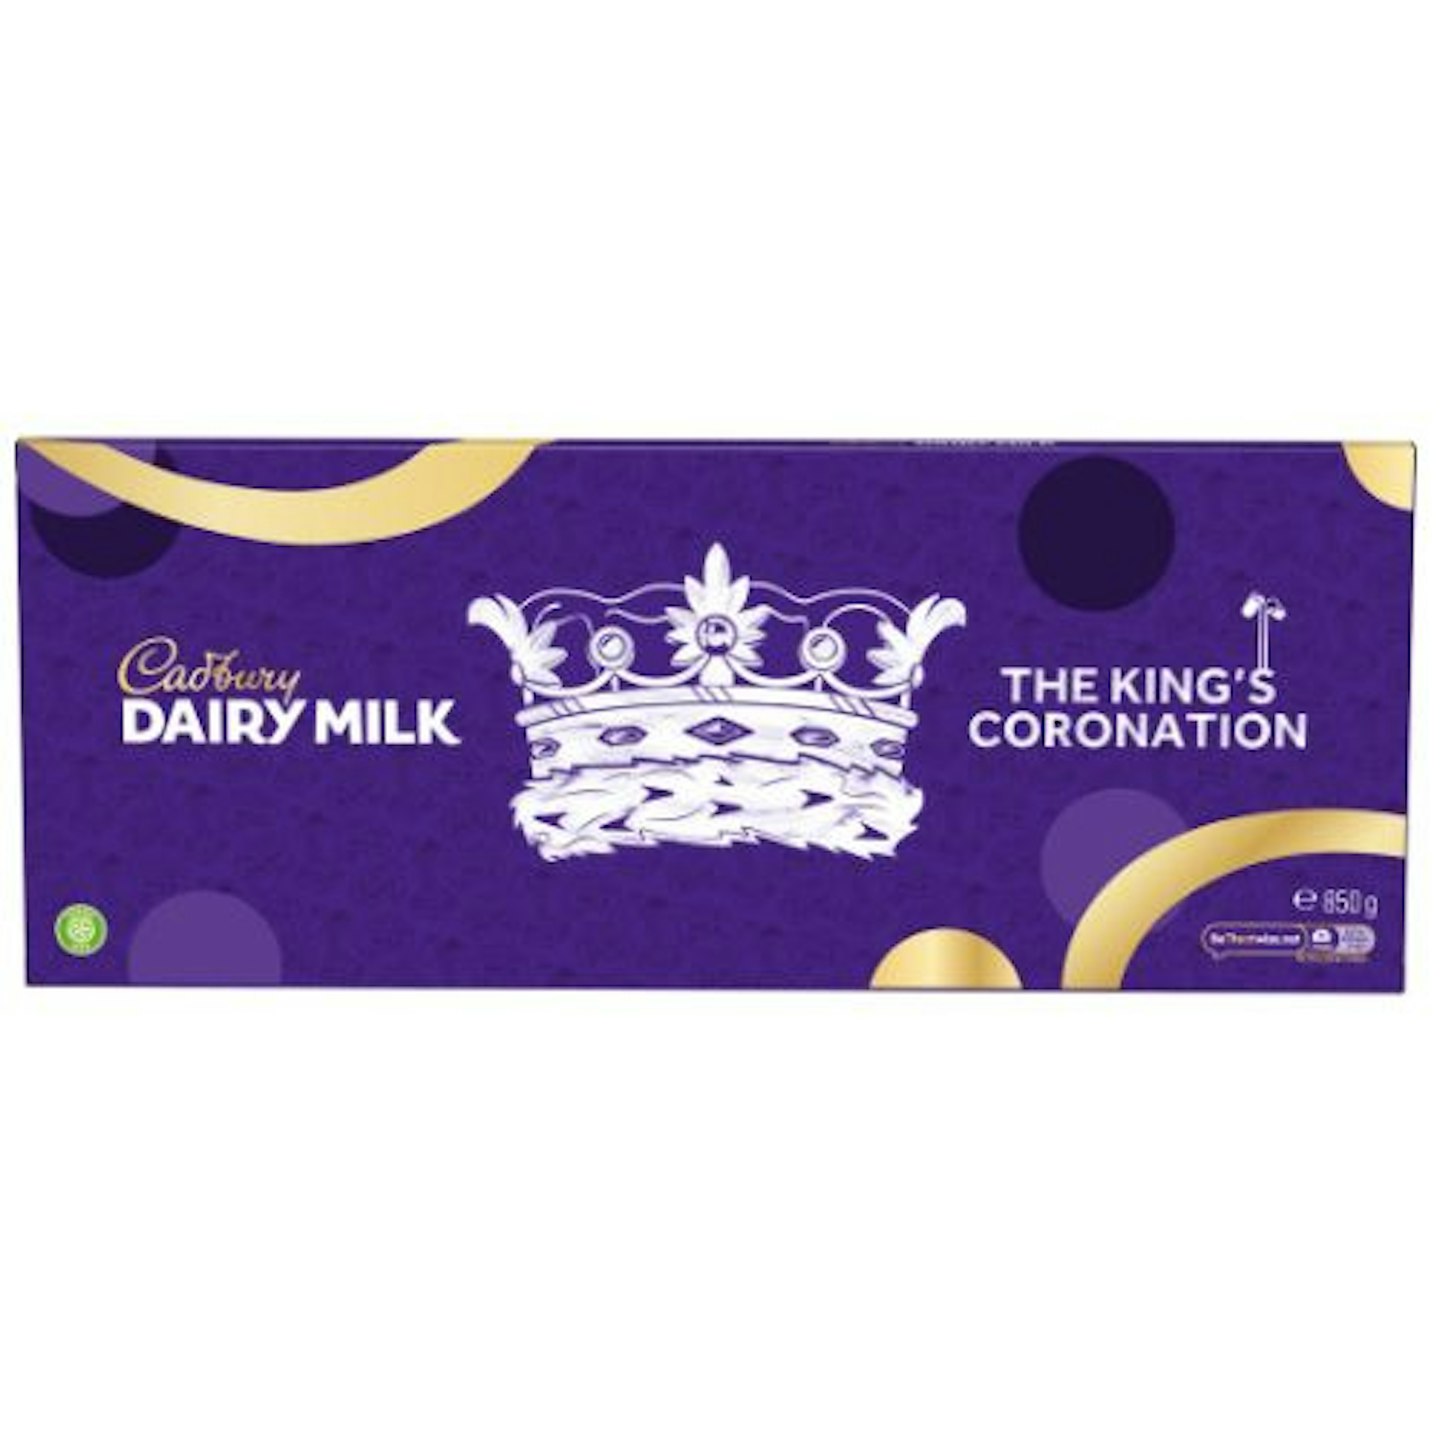 Cadbury Dairy Milk The King's Coronation